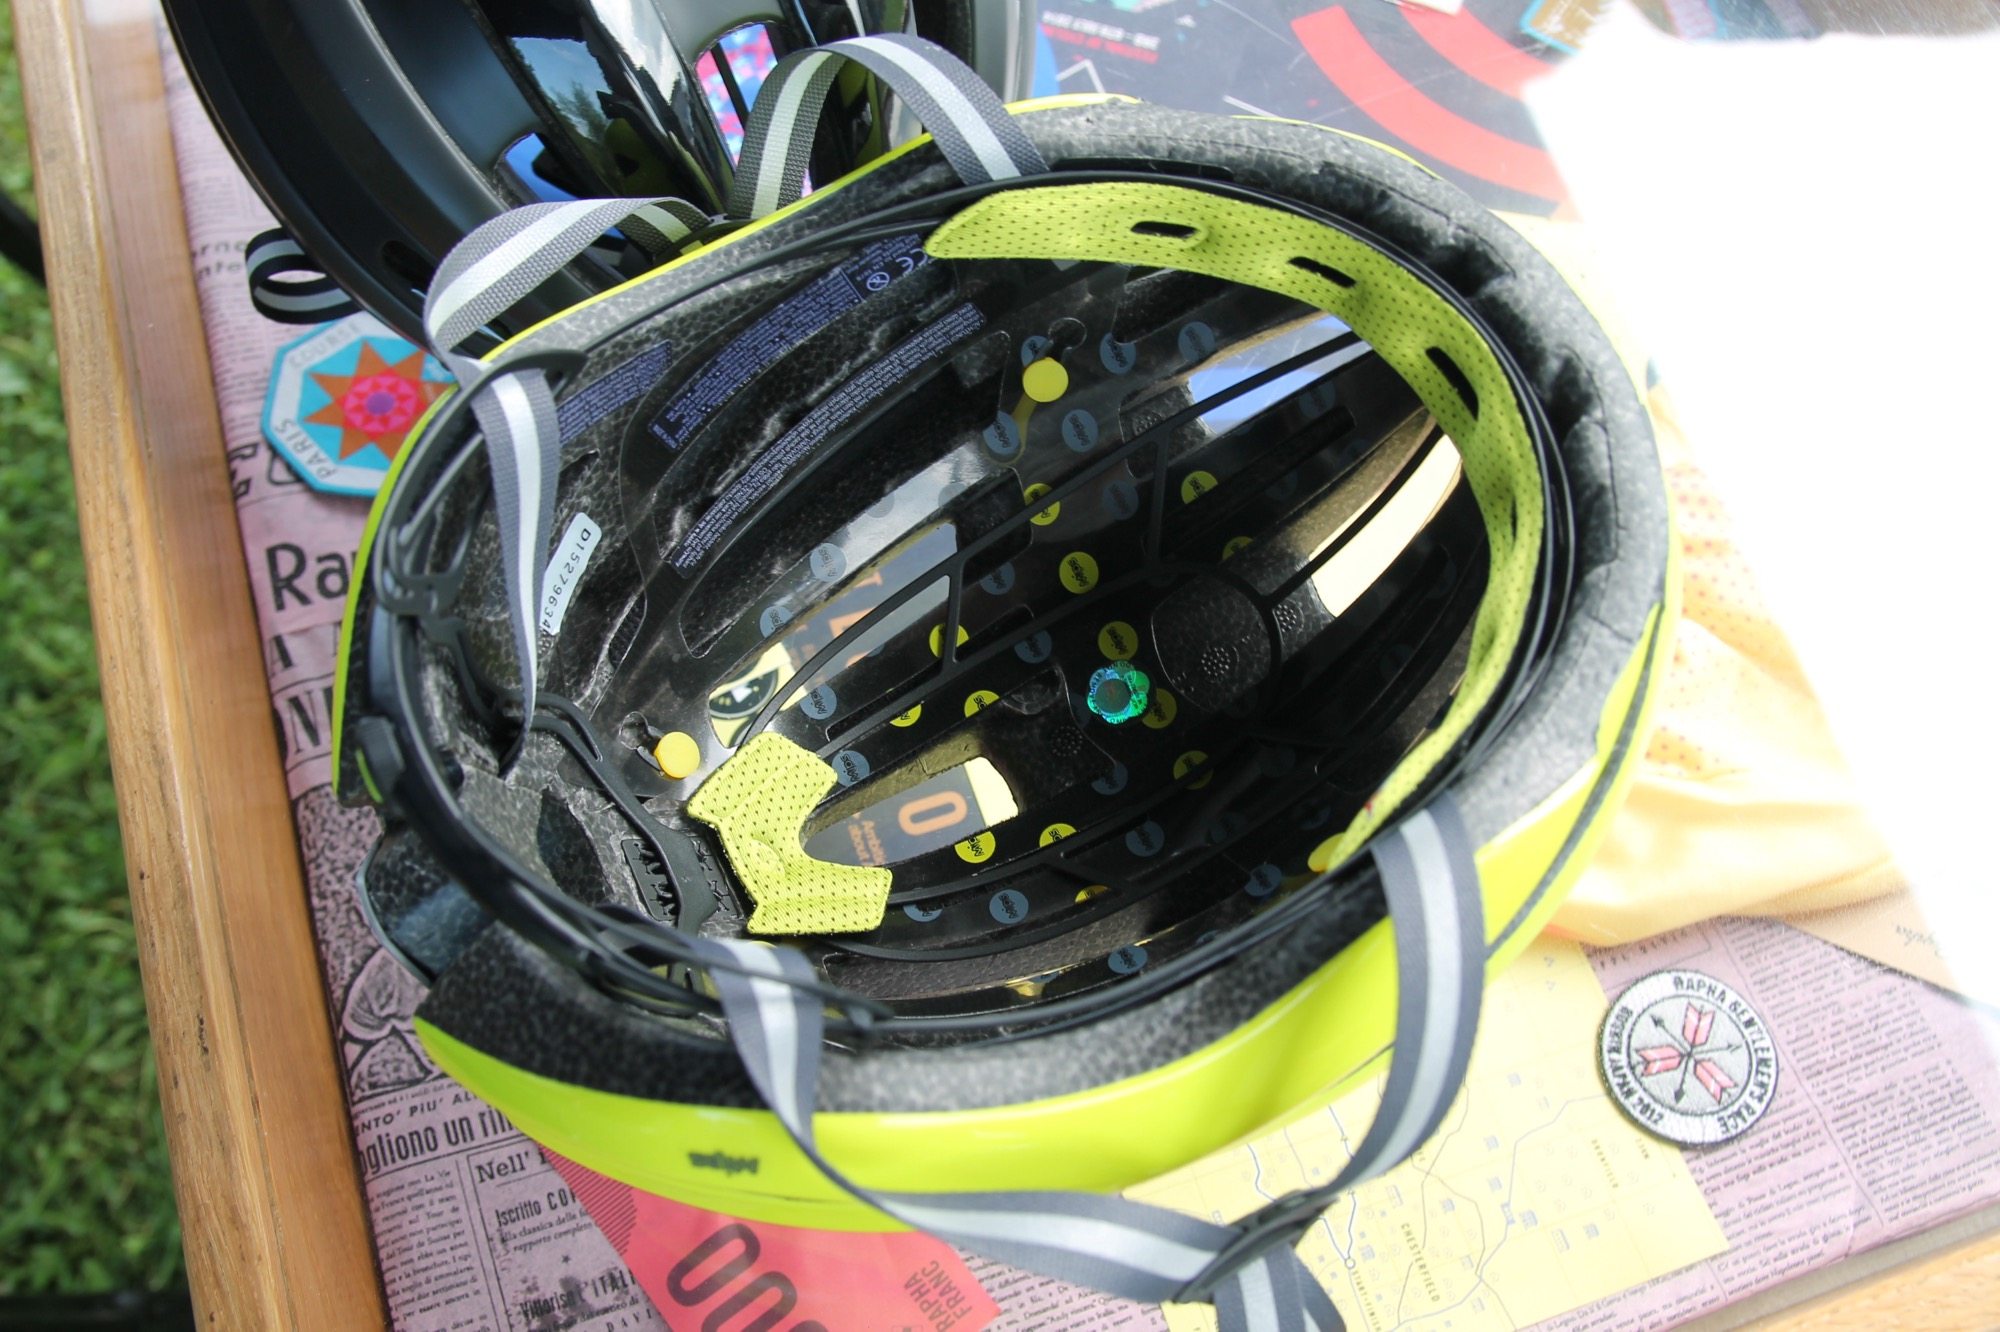 Eurobike sneak peek: Rapha unveils helmet | road.cc